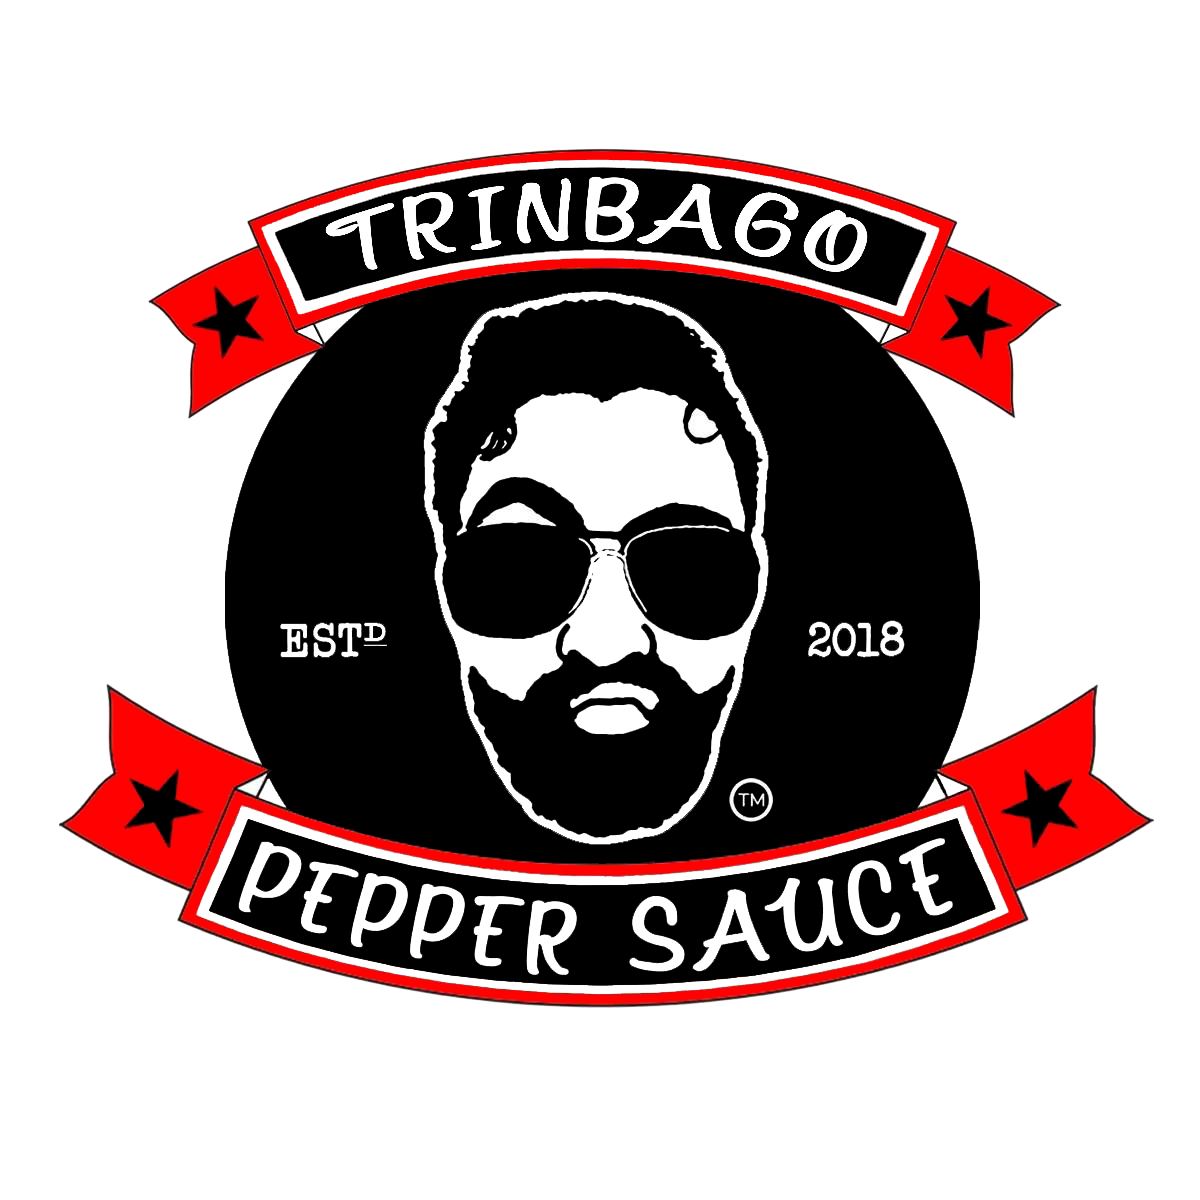 Trinbago Pepper Sauce